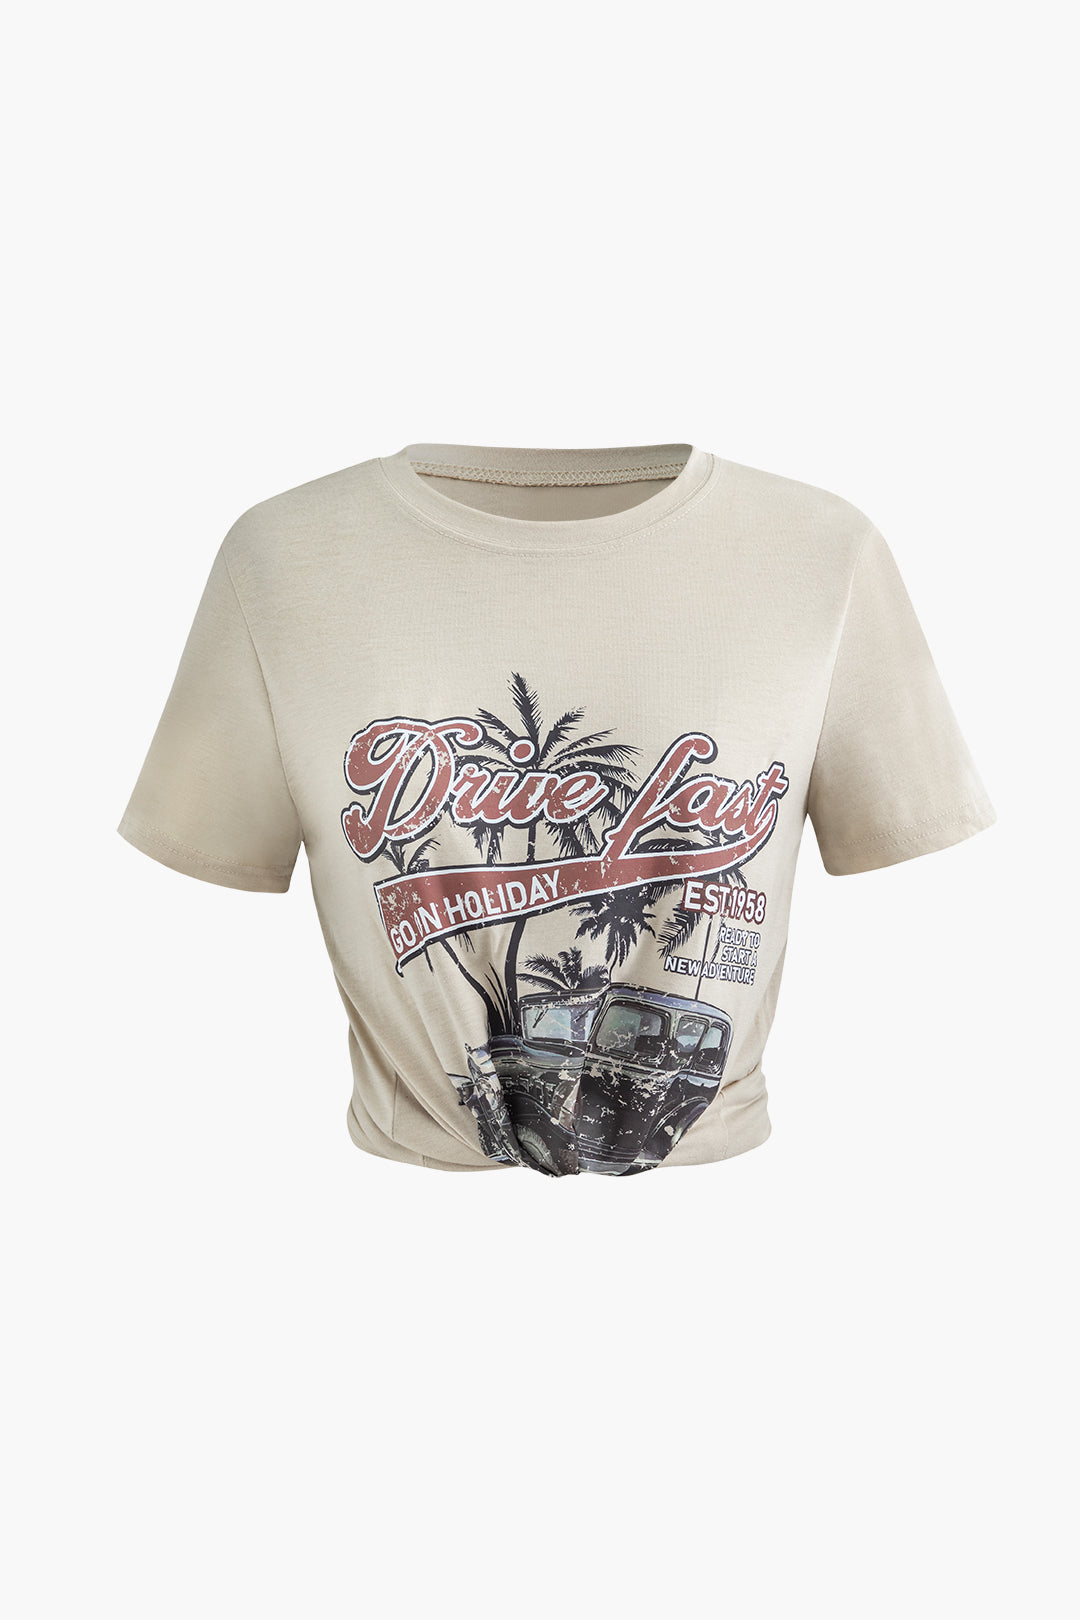 Palm Tree & Car Graphic Short Sleeve T-Shirt